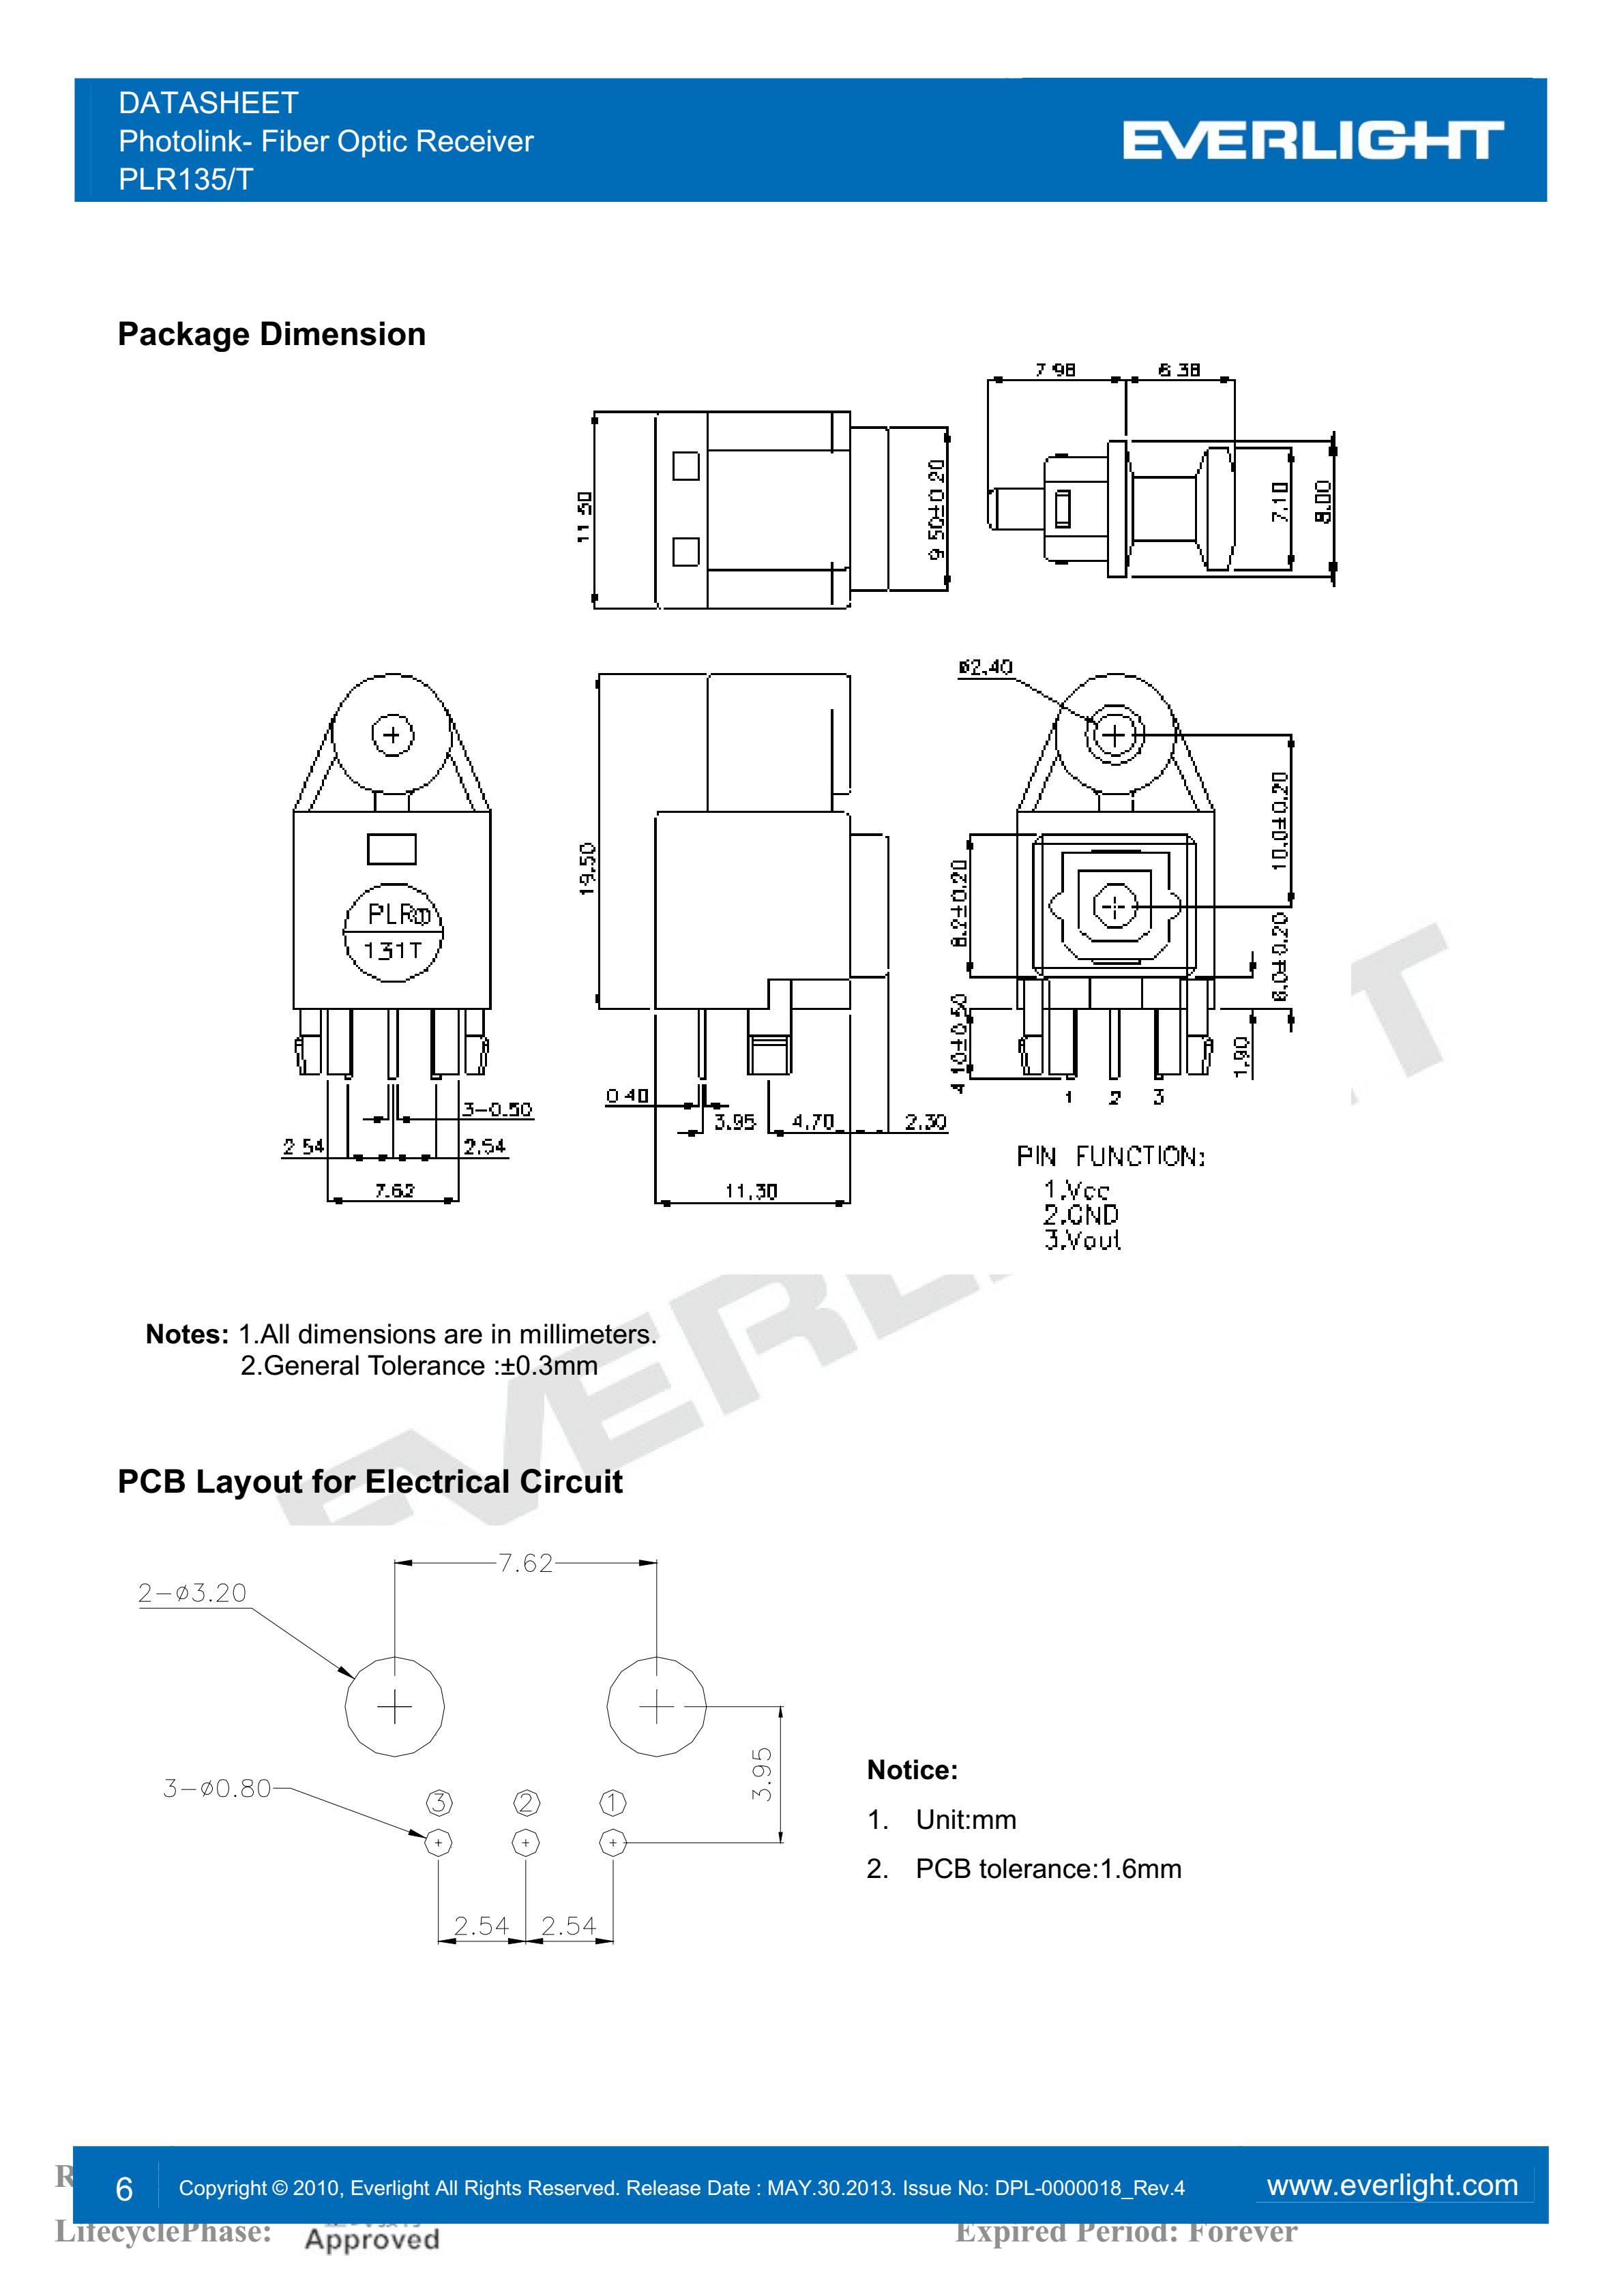 Everlight PLR135/T Photolink- Fiber Optic Receiver